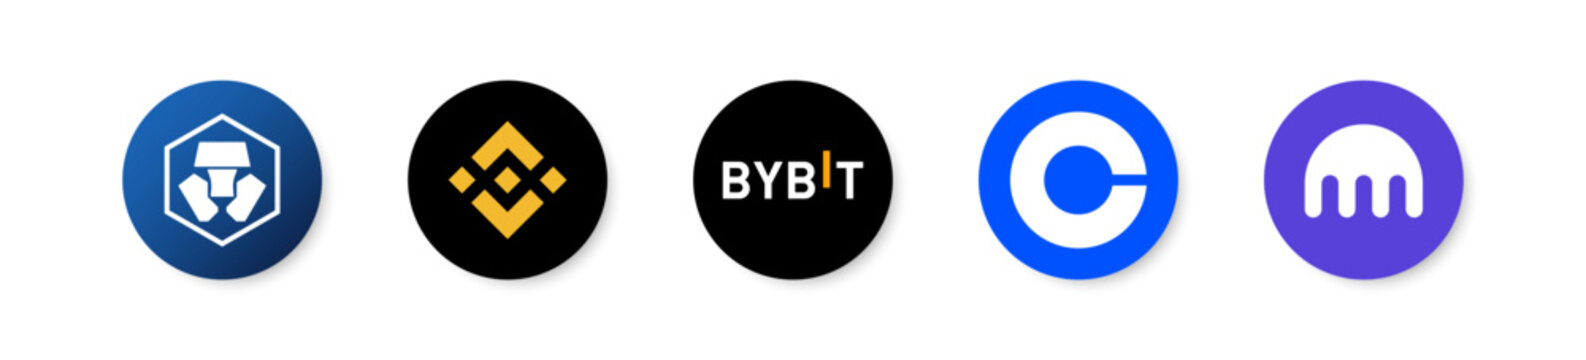 Crypto exchange app logo icon. Binance, Bybit, Kraken, Coinbase, Cryptocom finance electronic banking logotype. Investment coin. Vector illustration.